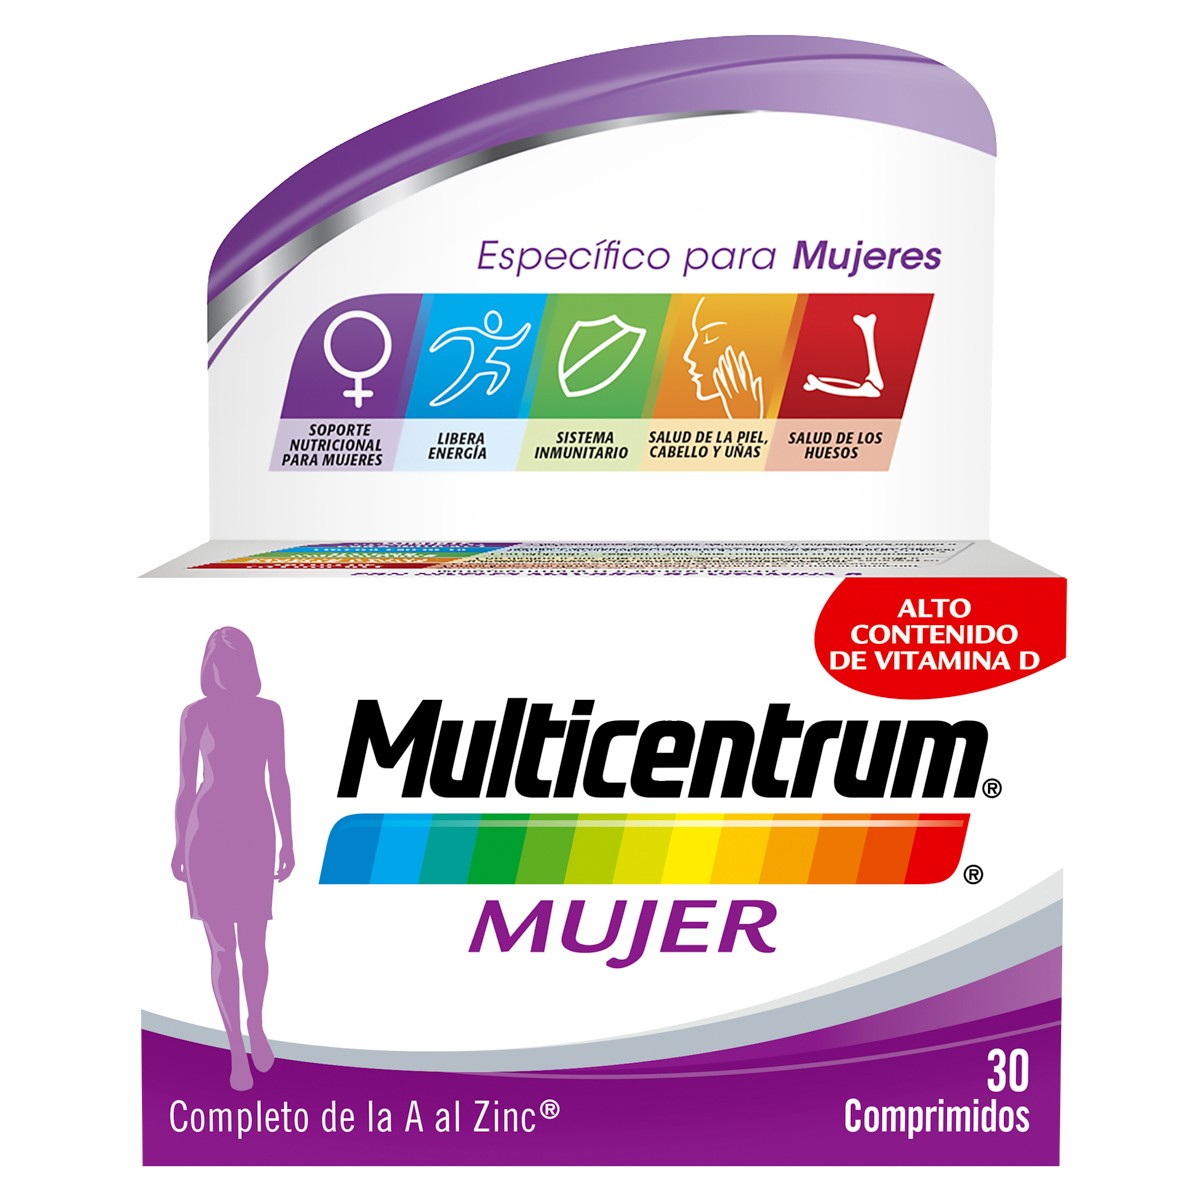 Imagen de Multicentrum mujer 30 comprimidos